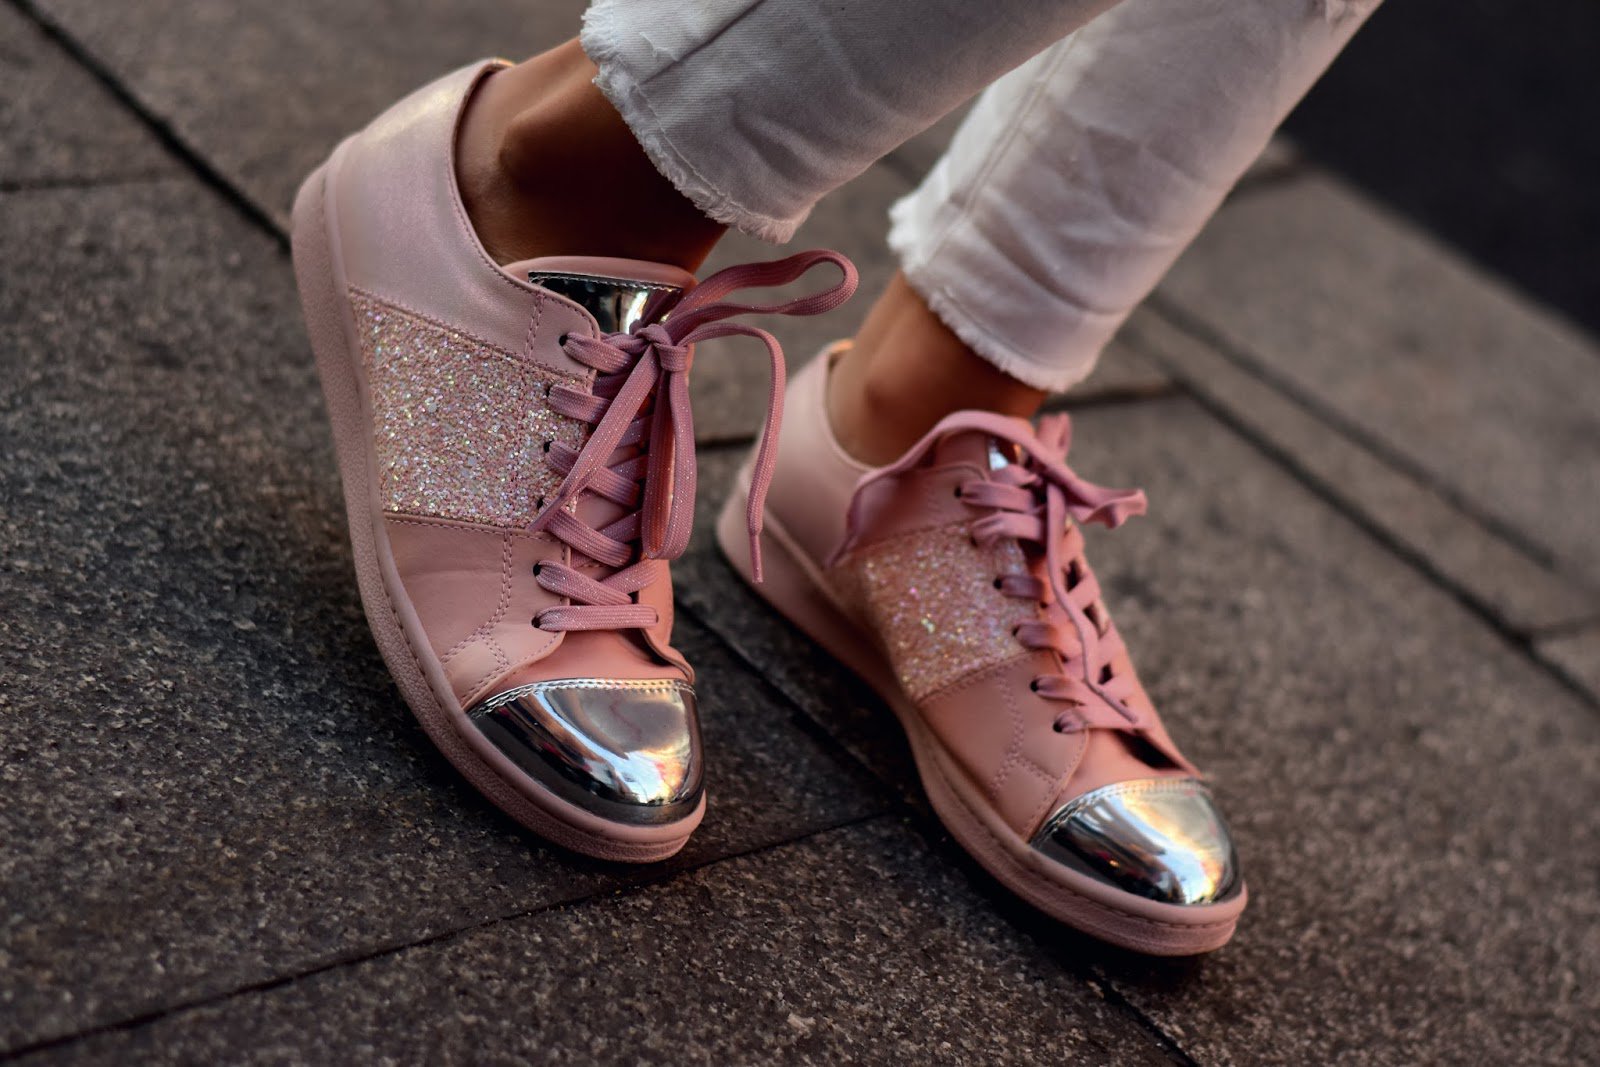 Betydning Cordelia Tid D'Angela på Twitter: "❤ Love sneakers #Kimberly Rosa &amp; Glitter  https://t.co/iyFASI2Gev @corazonmaniqui #DAngela #lovesneakers  https://t.co/linsUbb3CO" / Twitter